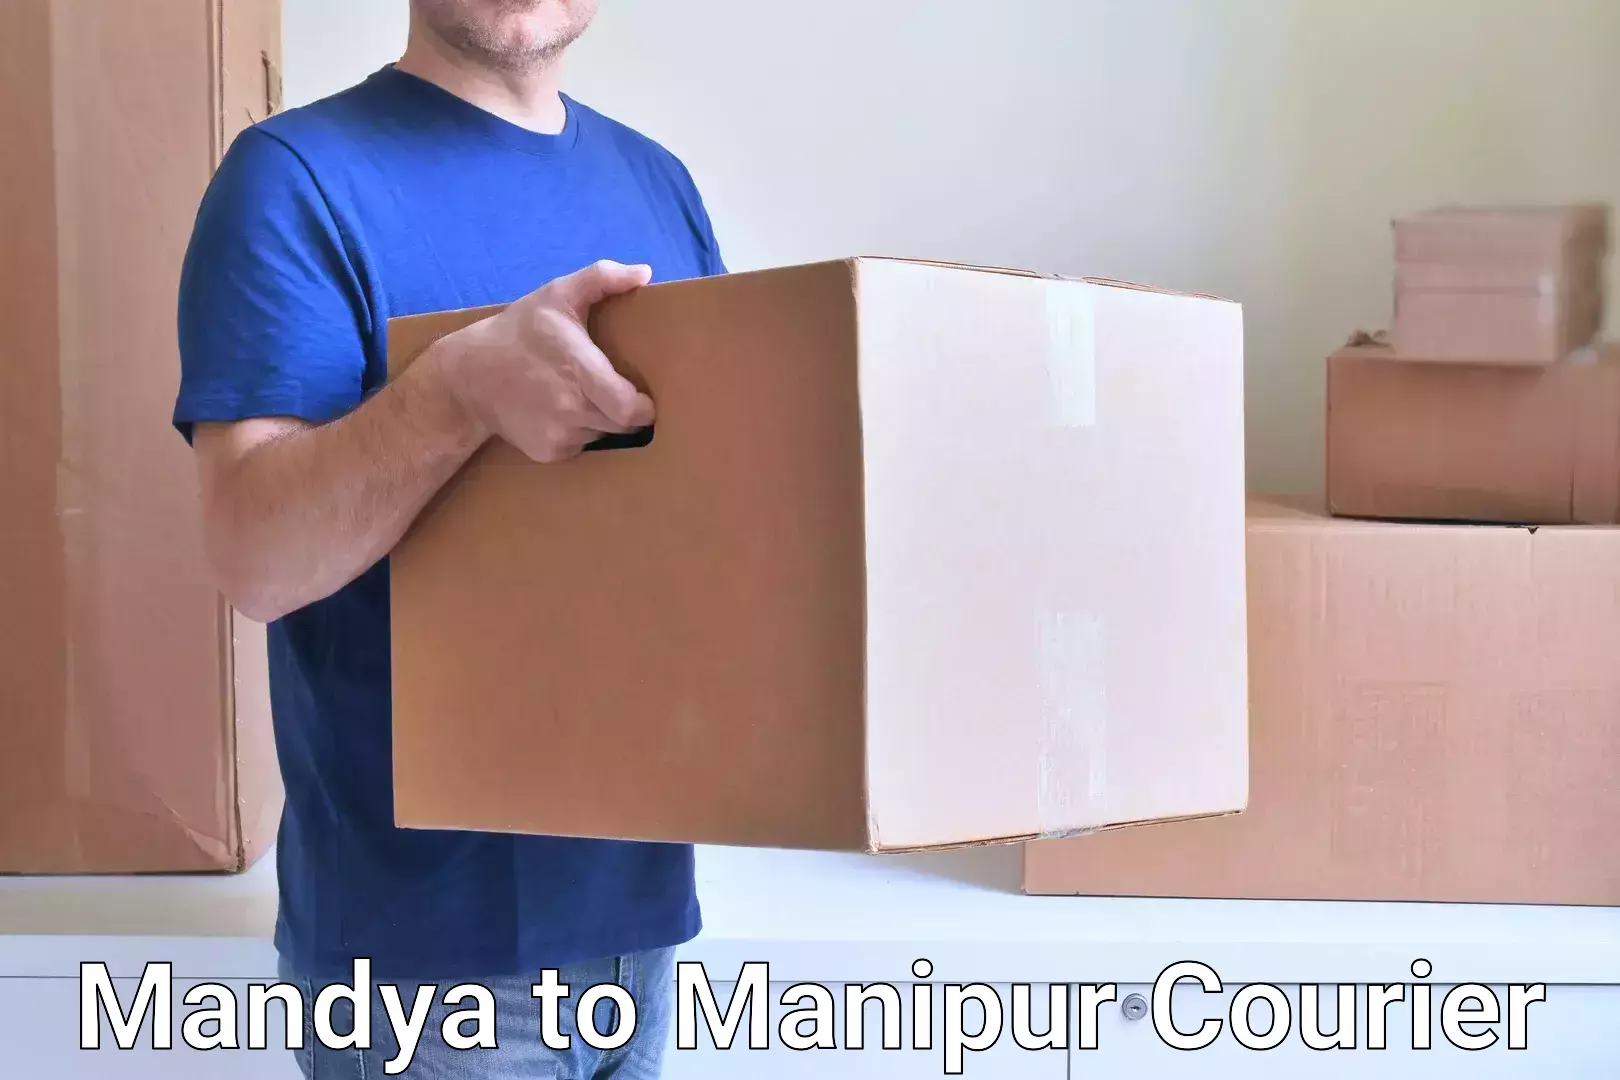 Quick dispatch service Mandya to Chandel